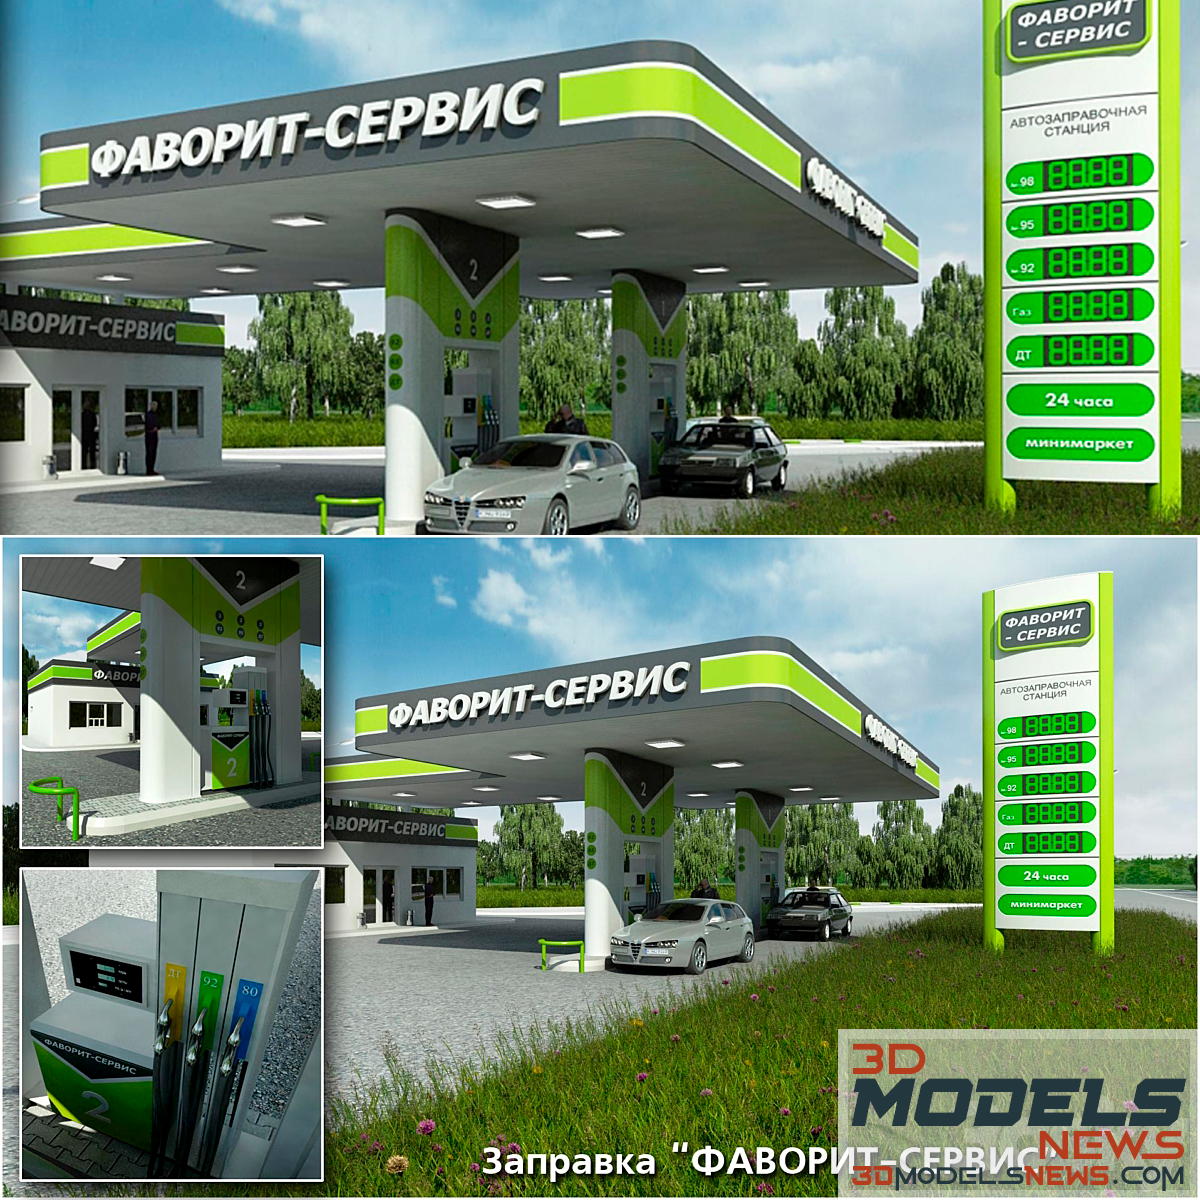 Gas station model